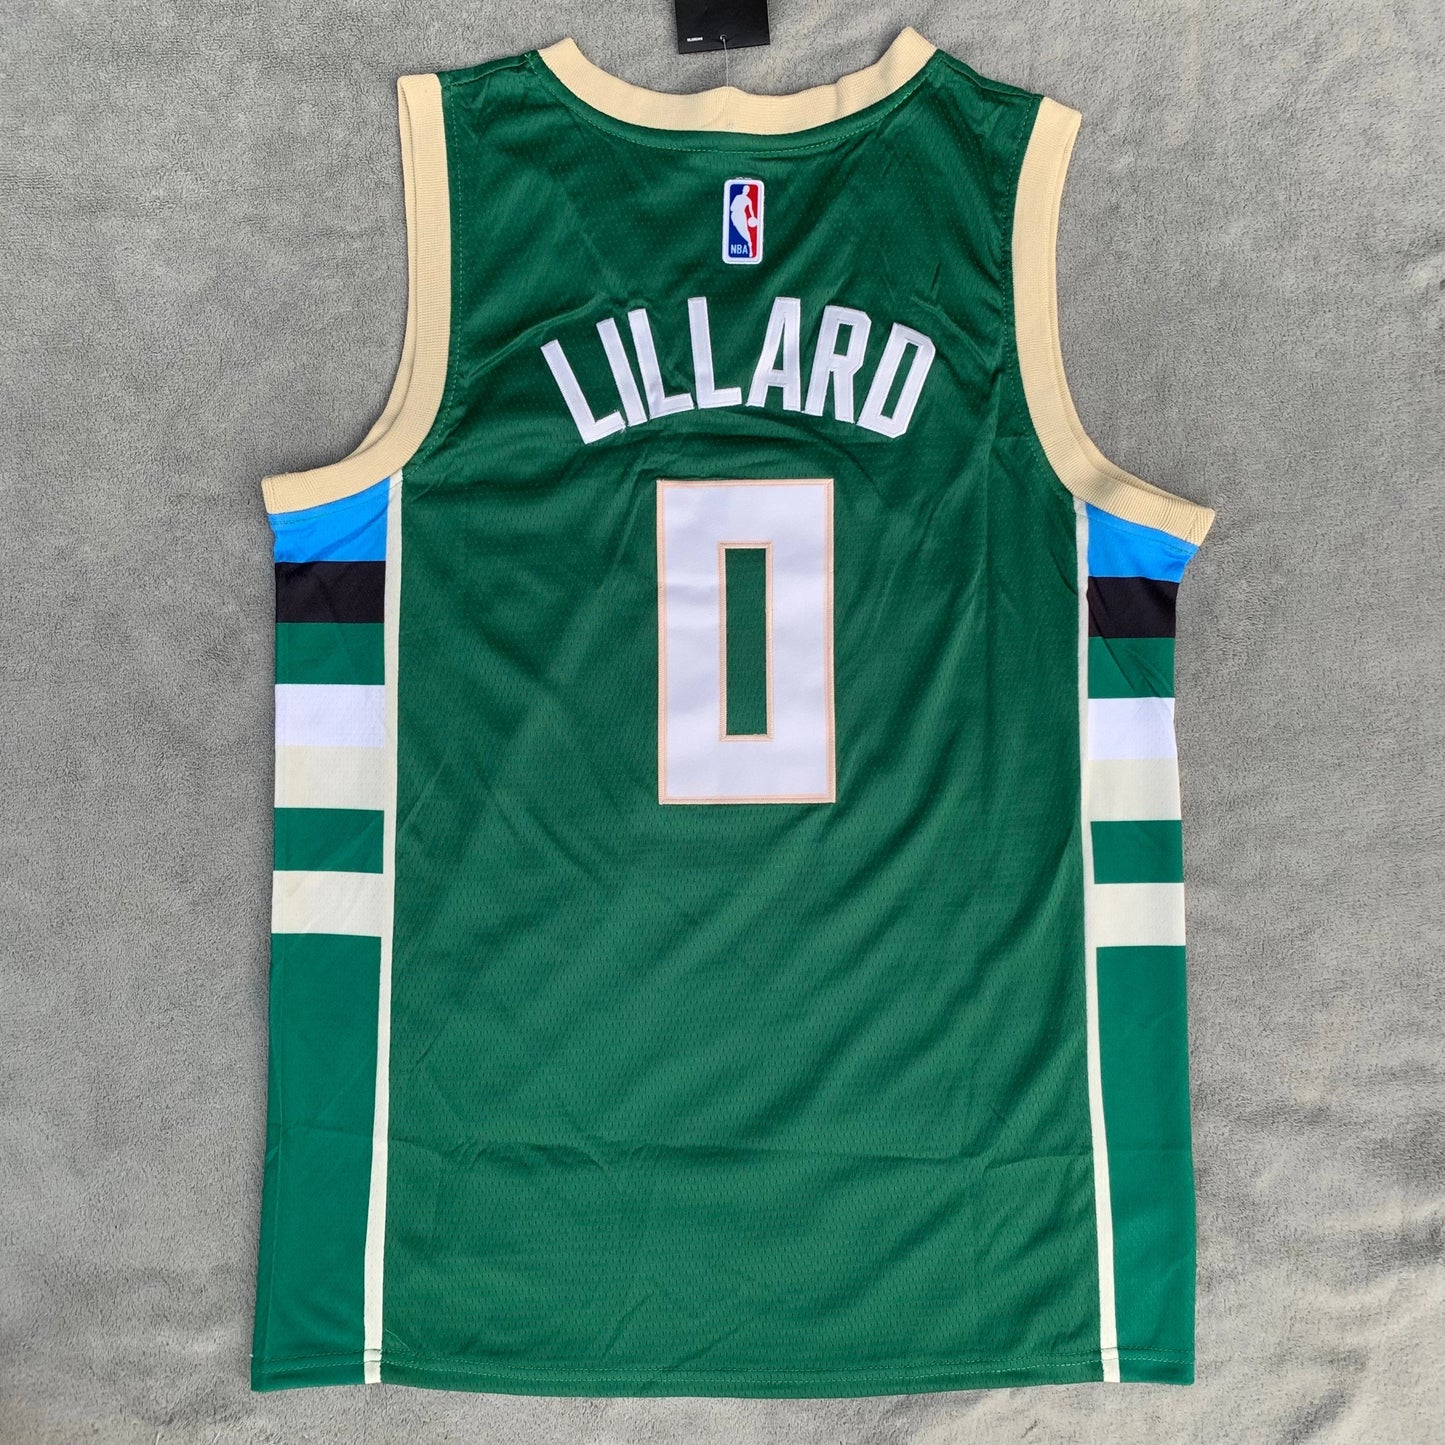 Damian Lillard No. 0 Milwaukee Green Jersey NBA